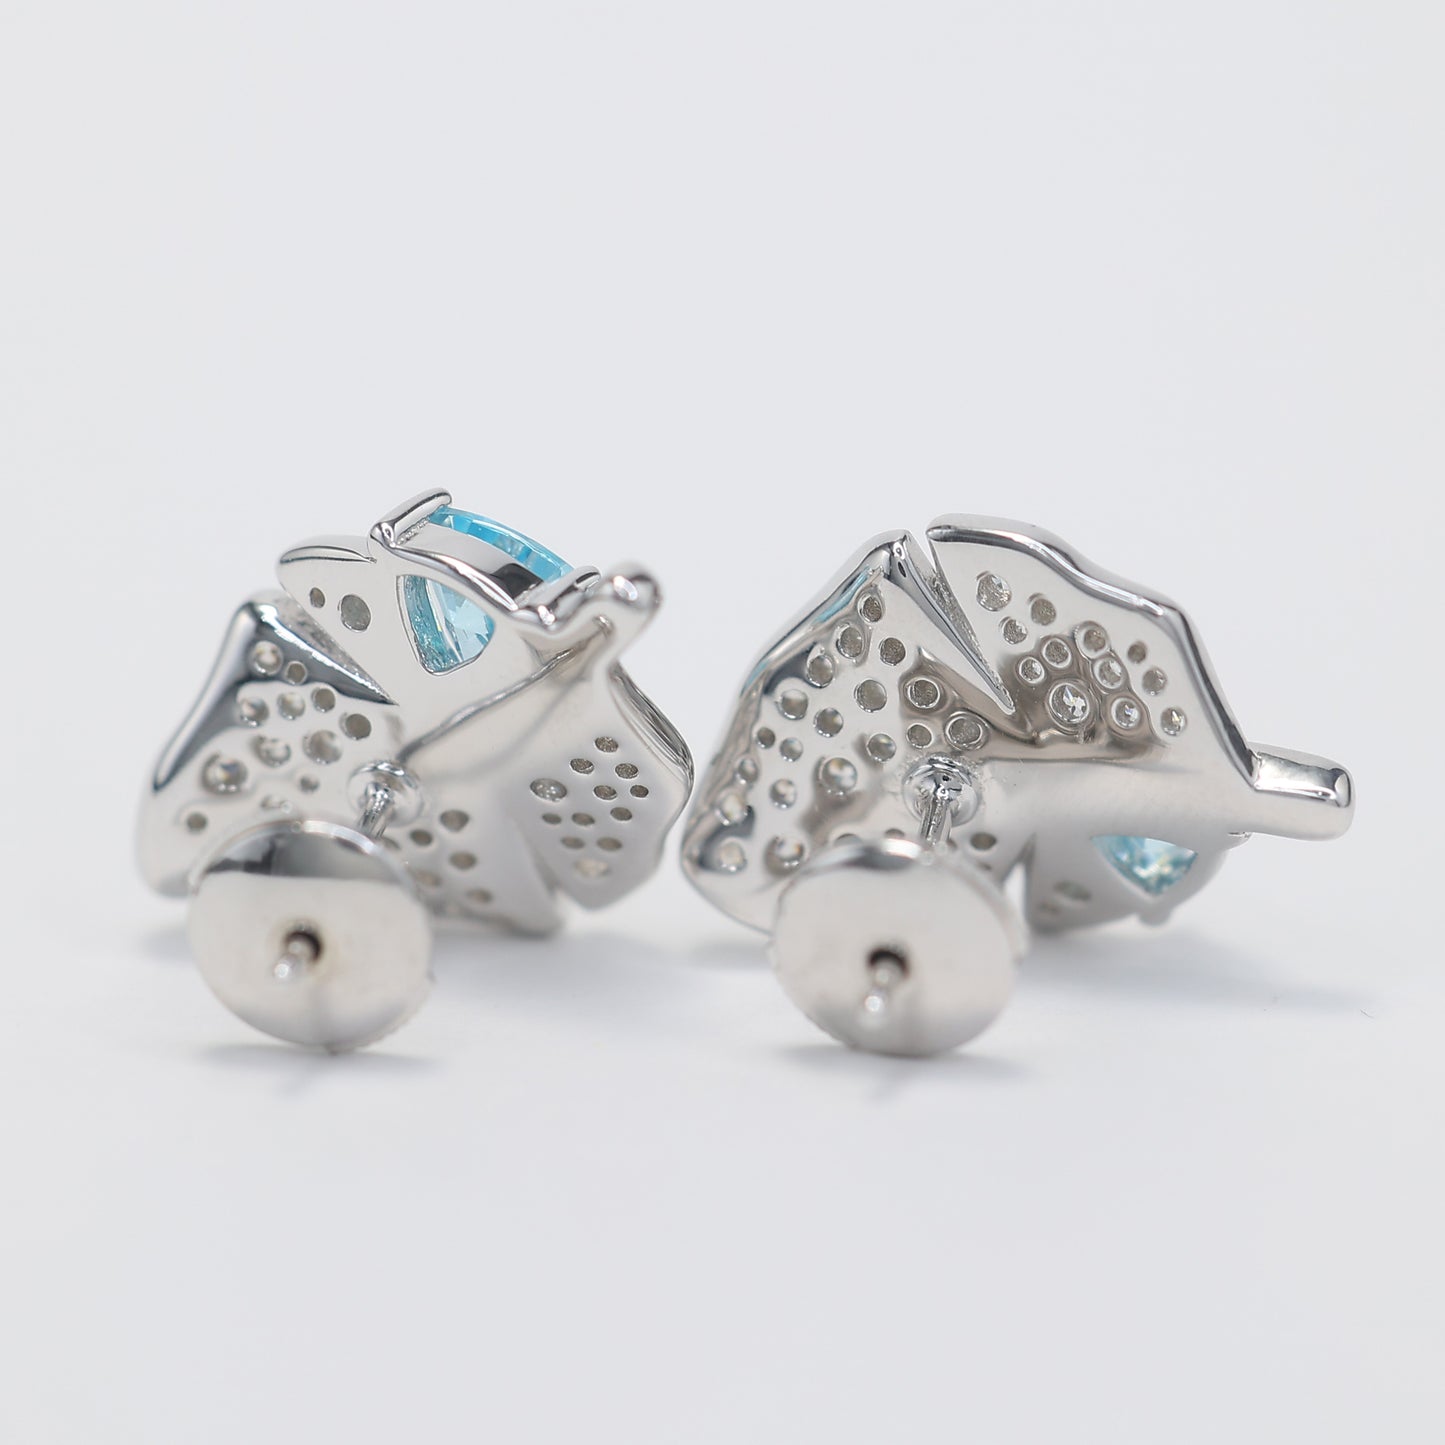 Micro-setting Aquamarine color leaf earrings, sterling silver